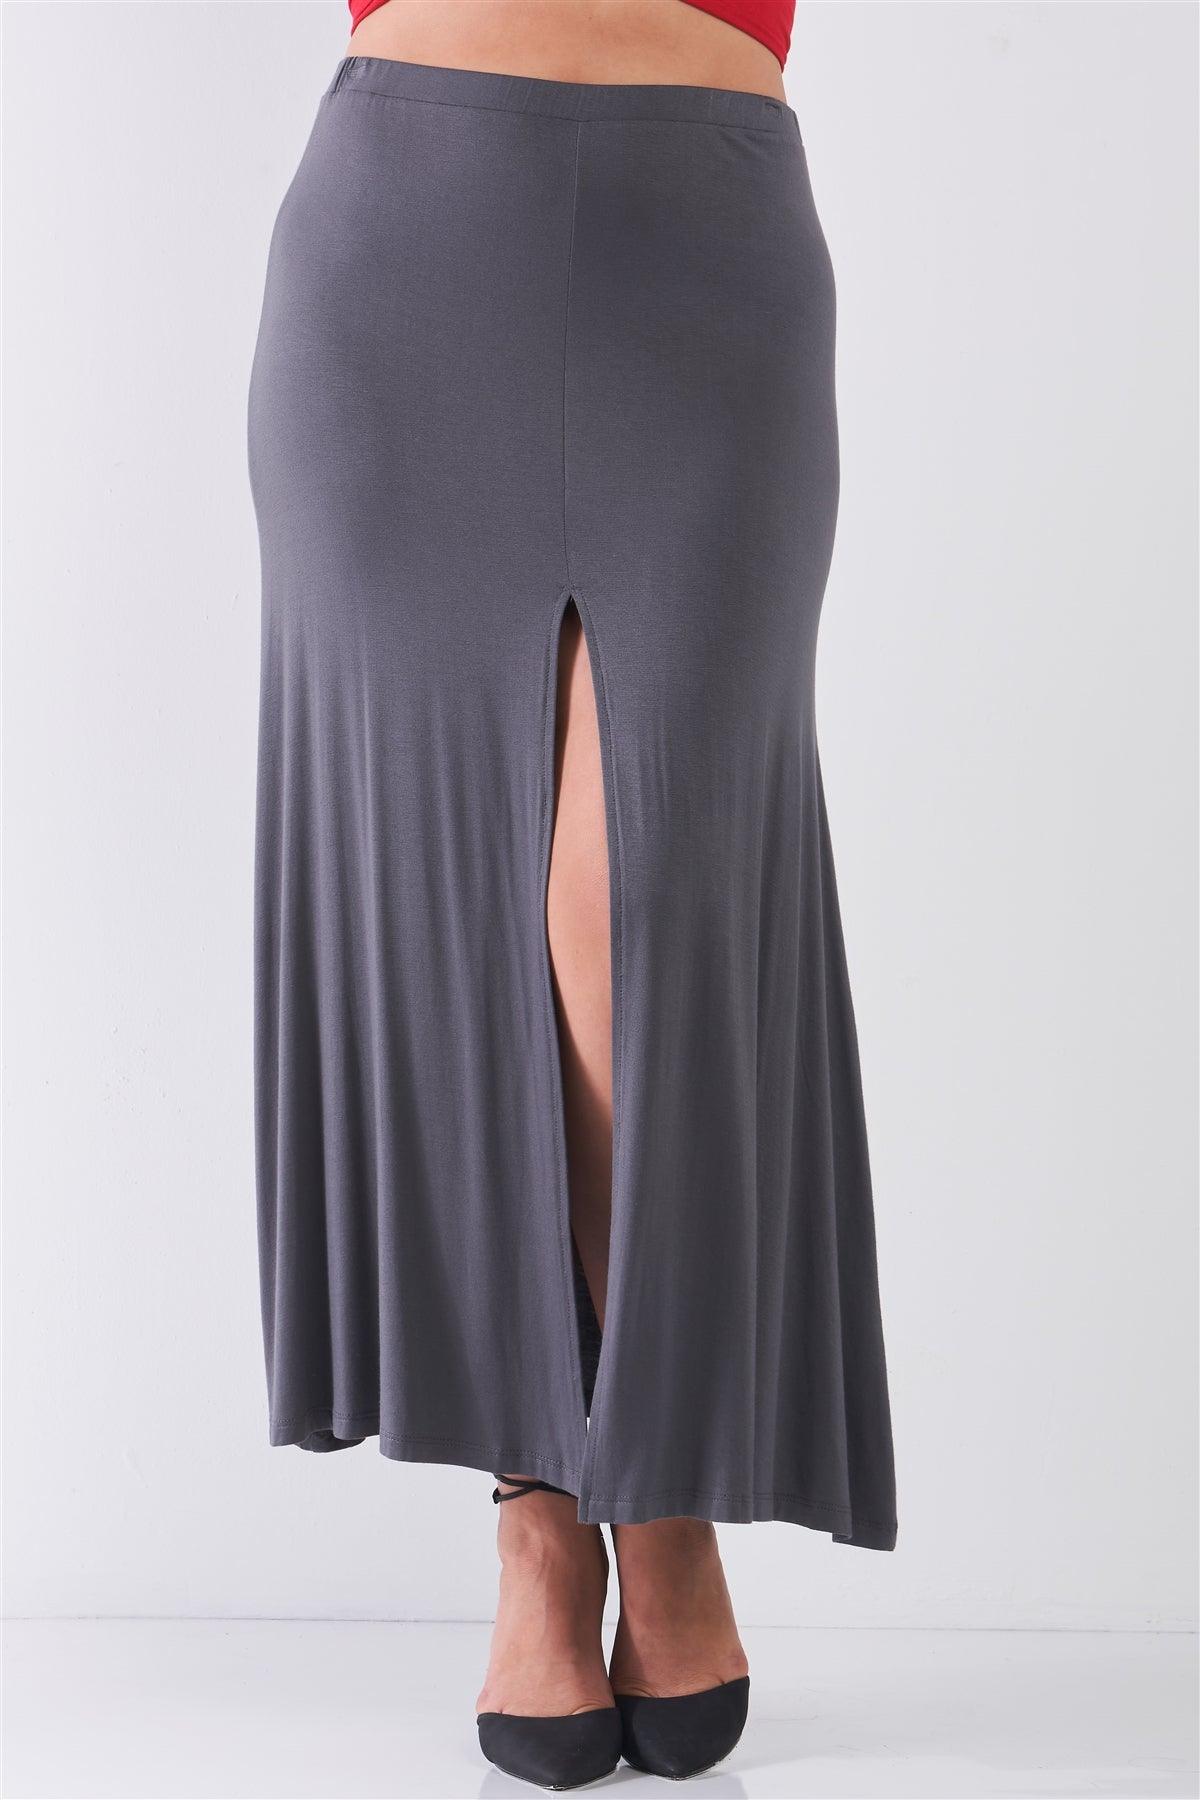 Junior Plus Size Charcoal Basic Front Slit Maxi Skirt /2-2-2